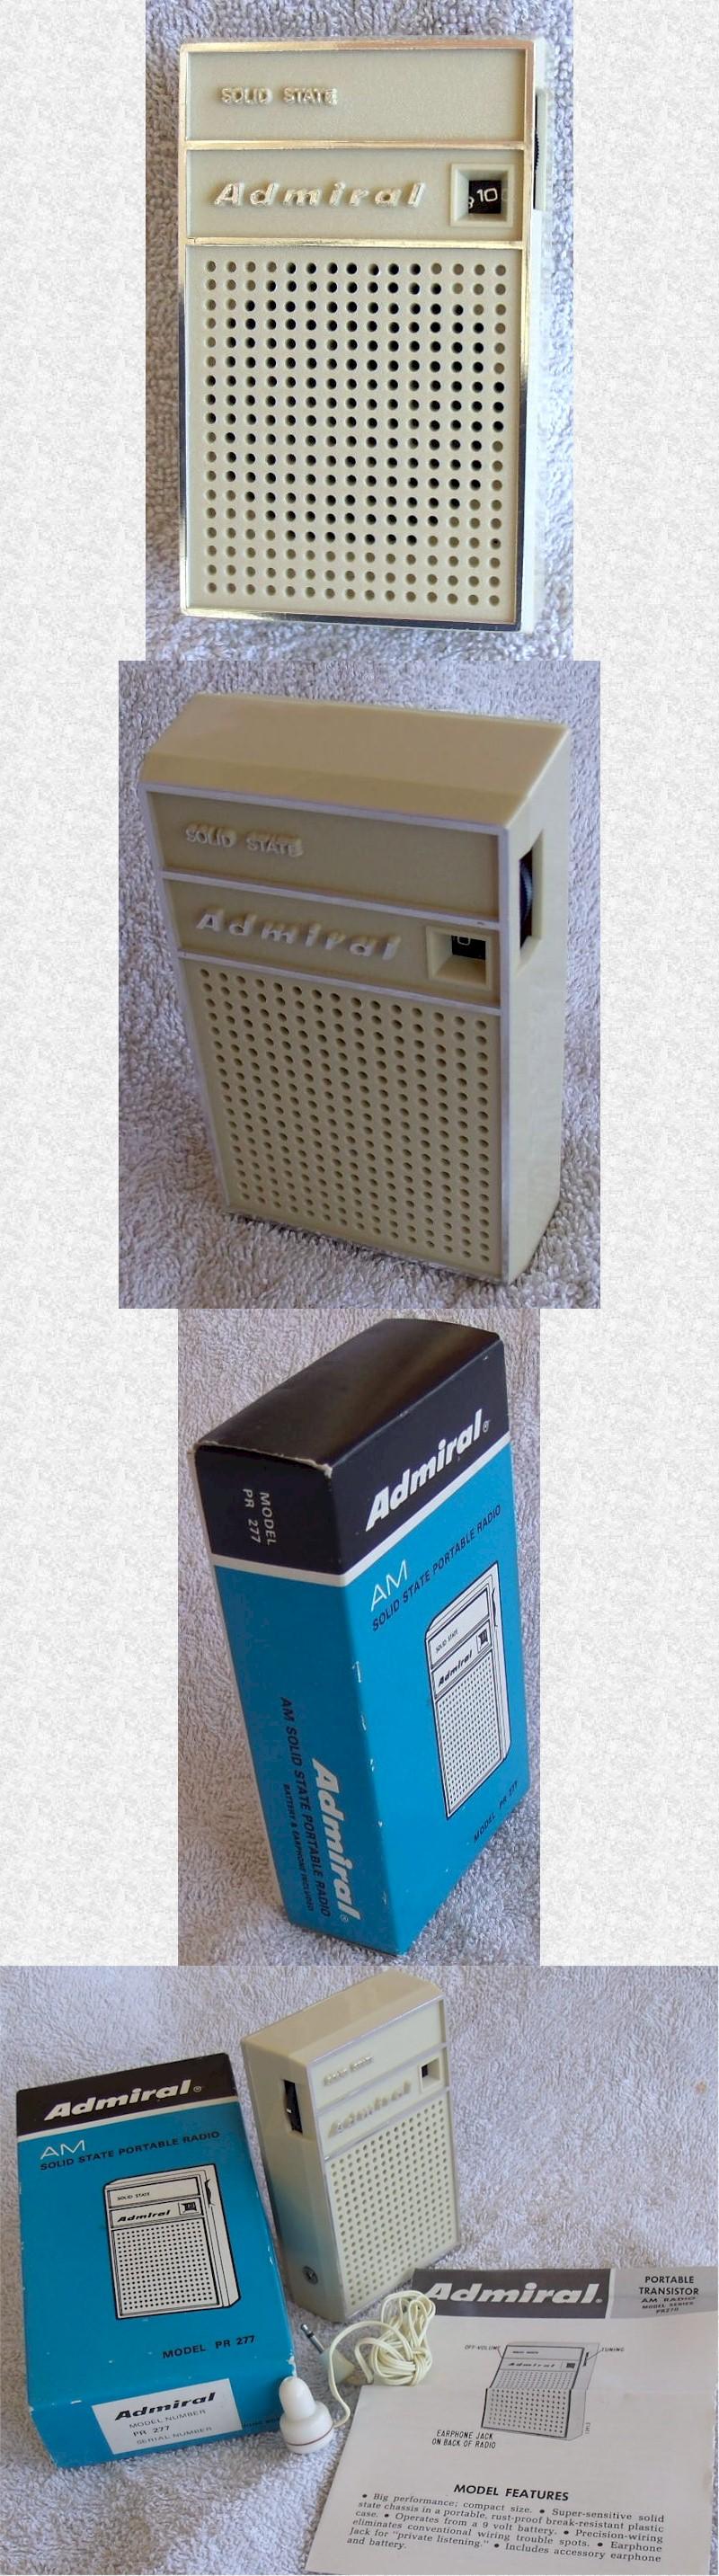 Admiral PR277 Pocket Transistor (late 60s)